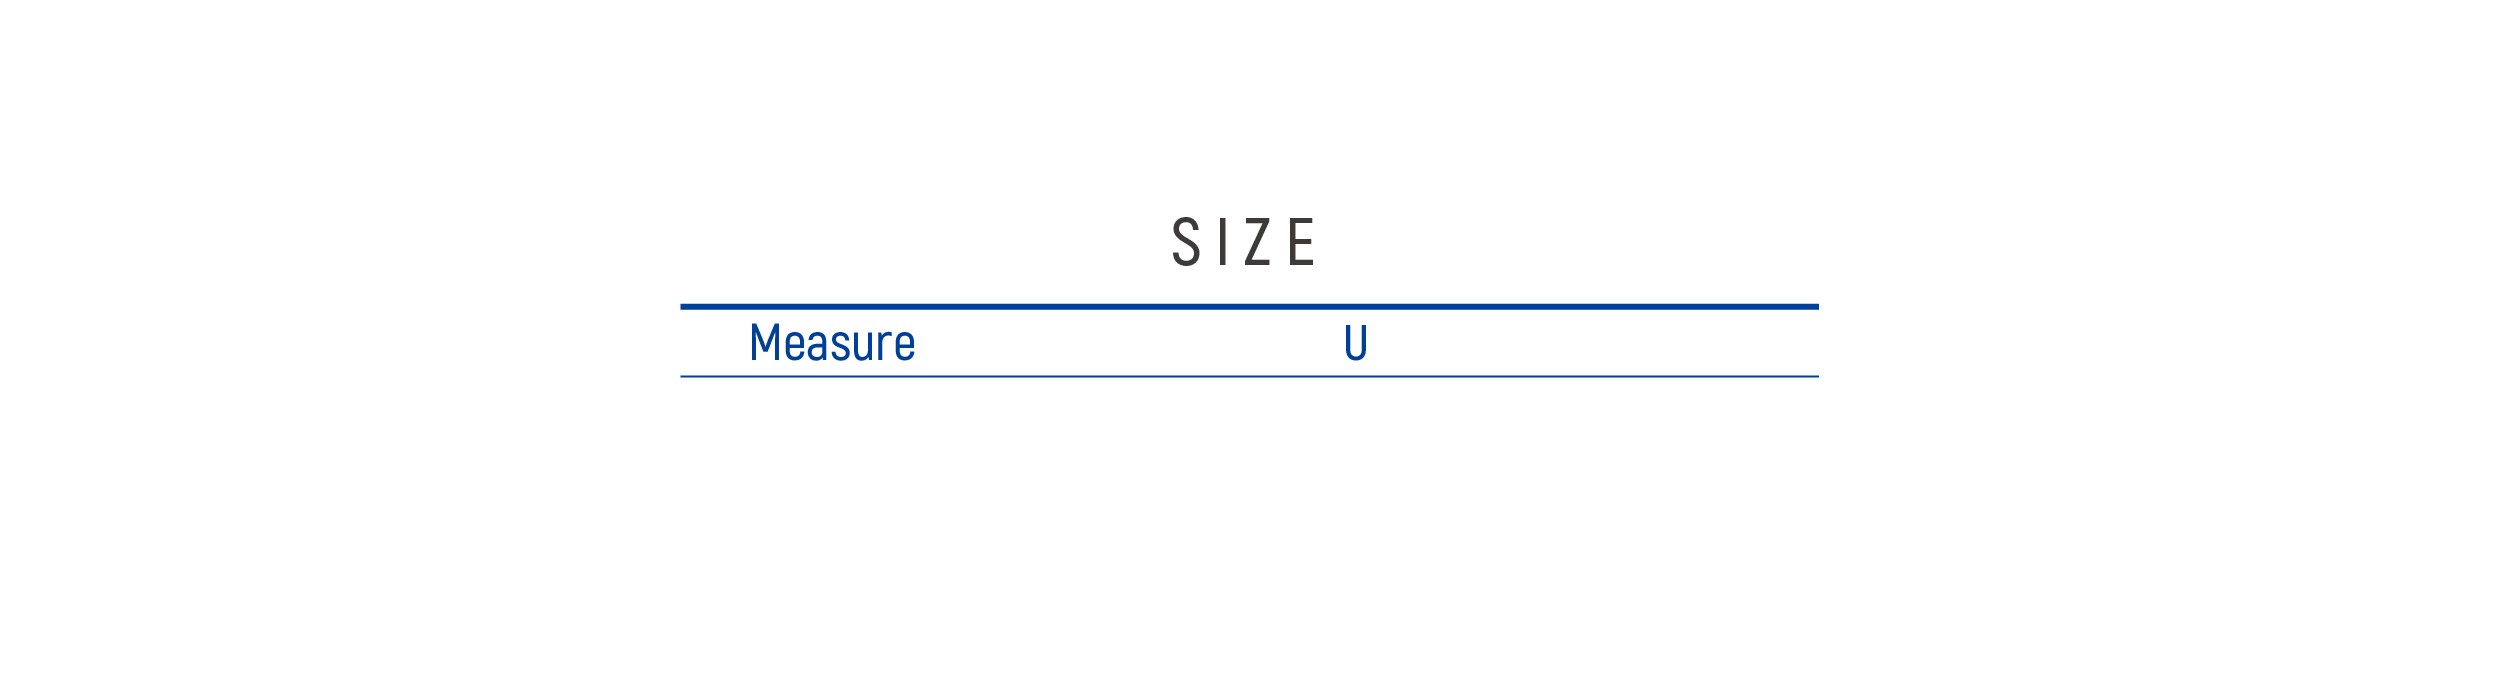 DR-E020 Size table image